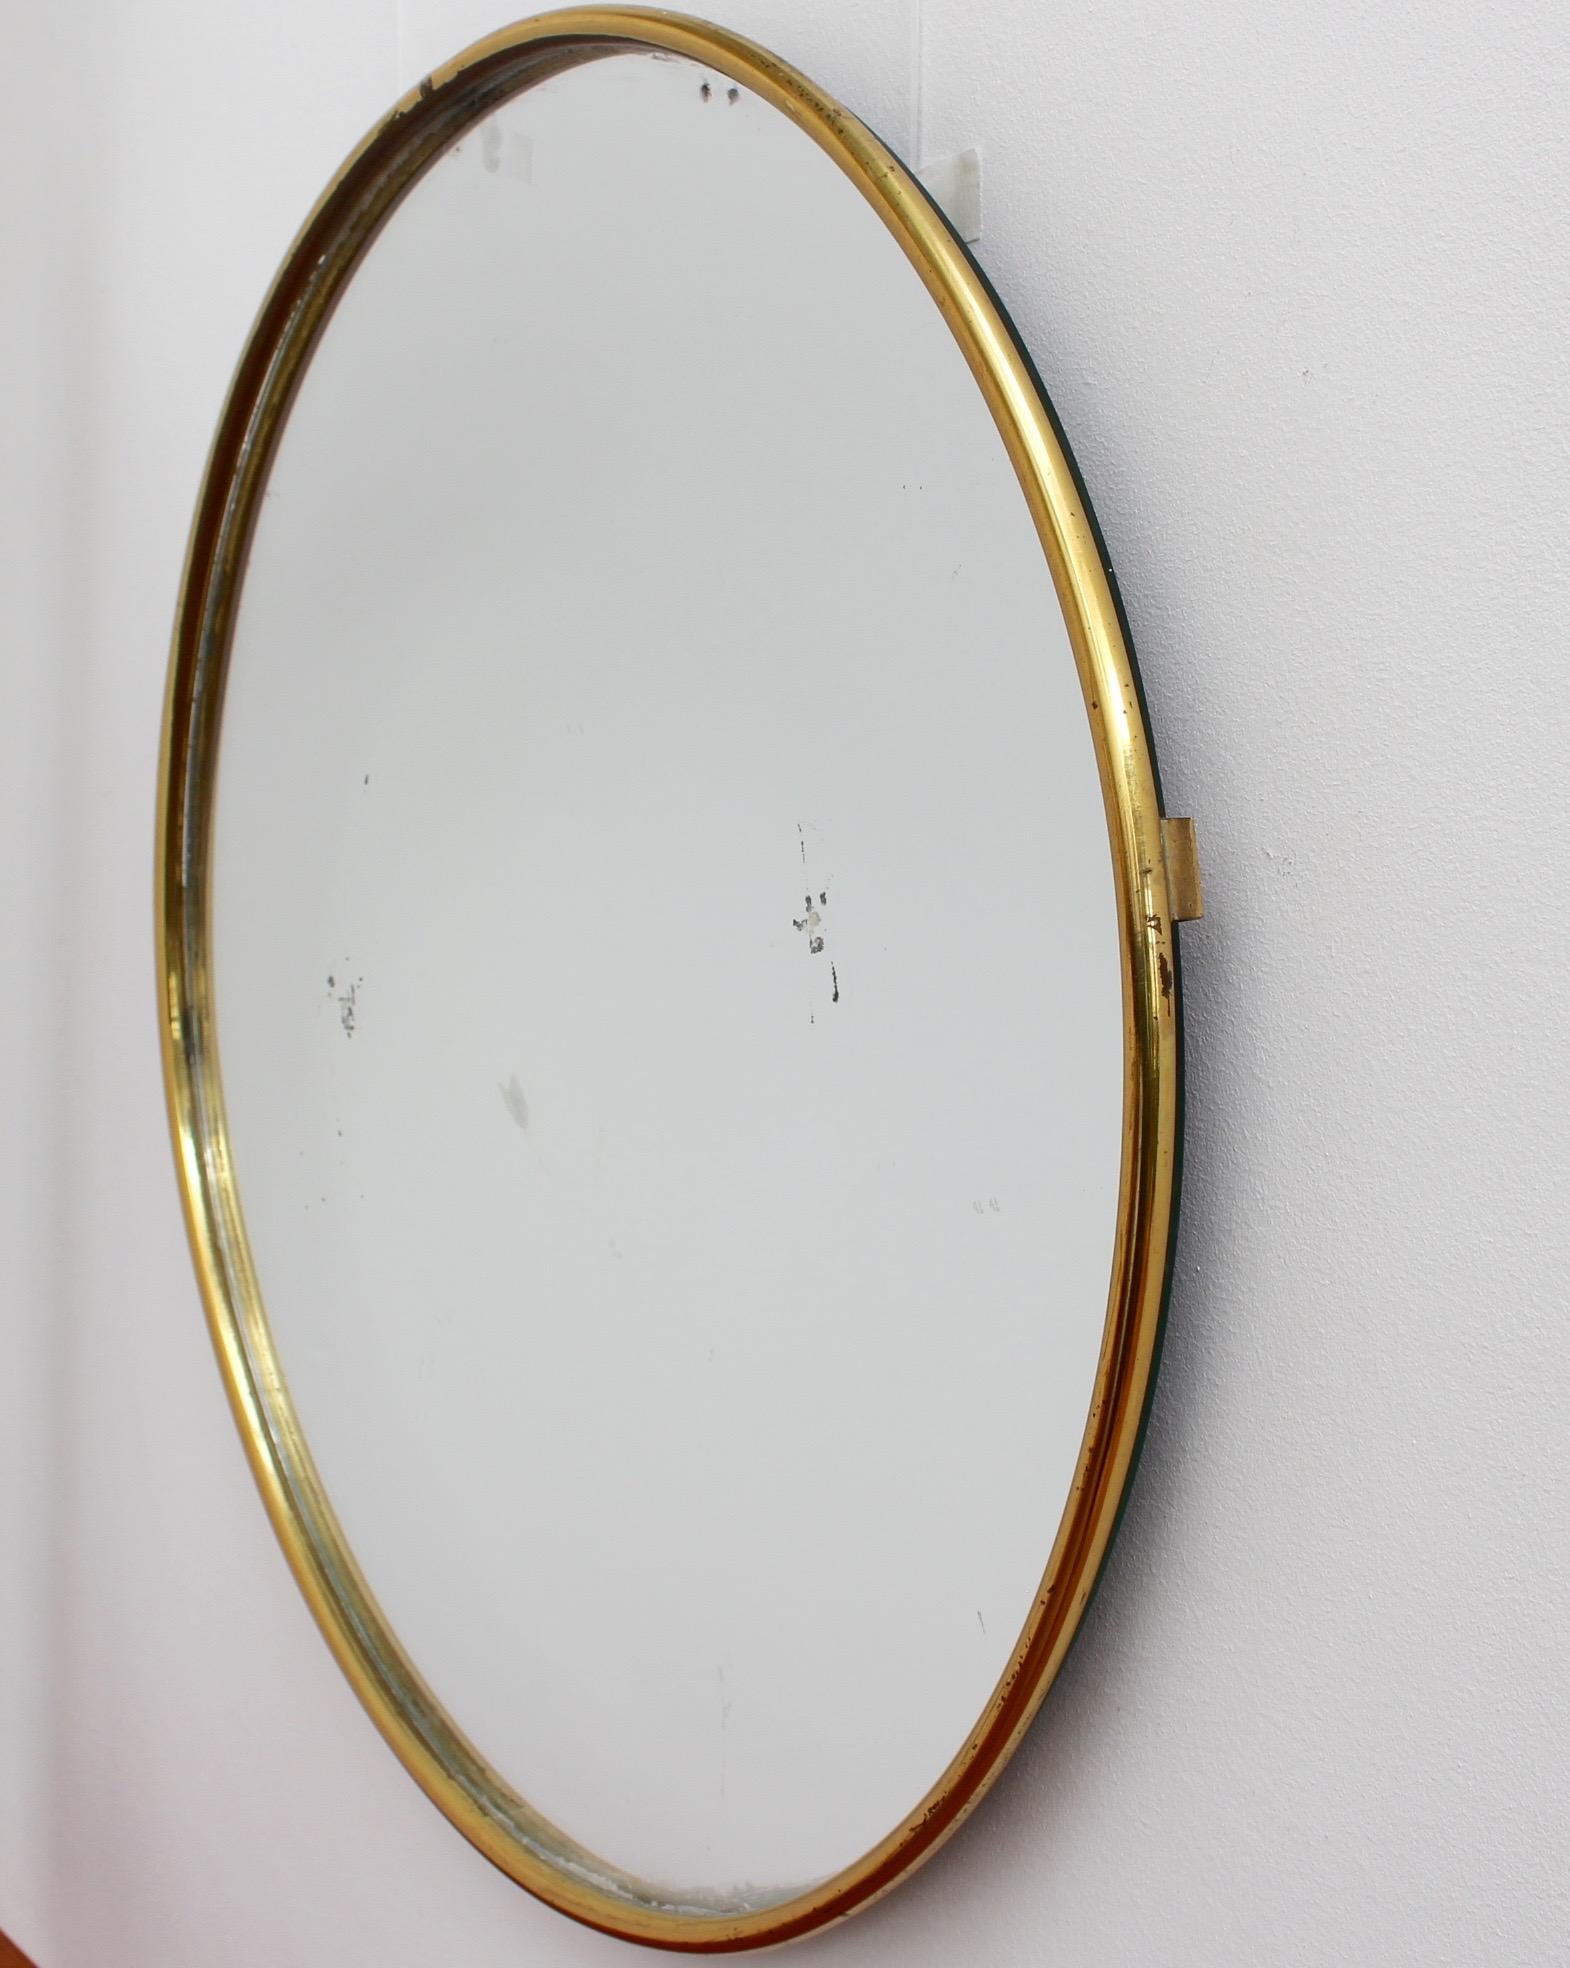 Midcentury Italian Wall Mirror with Brass Frame, circa 1950s 2